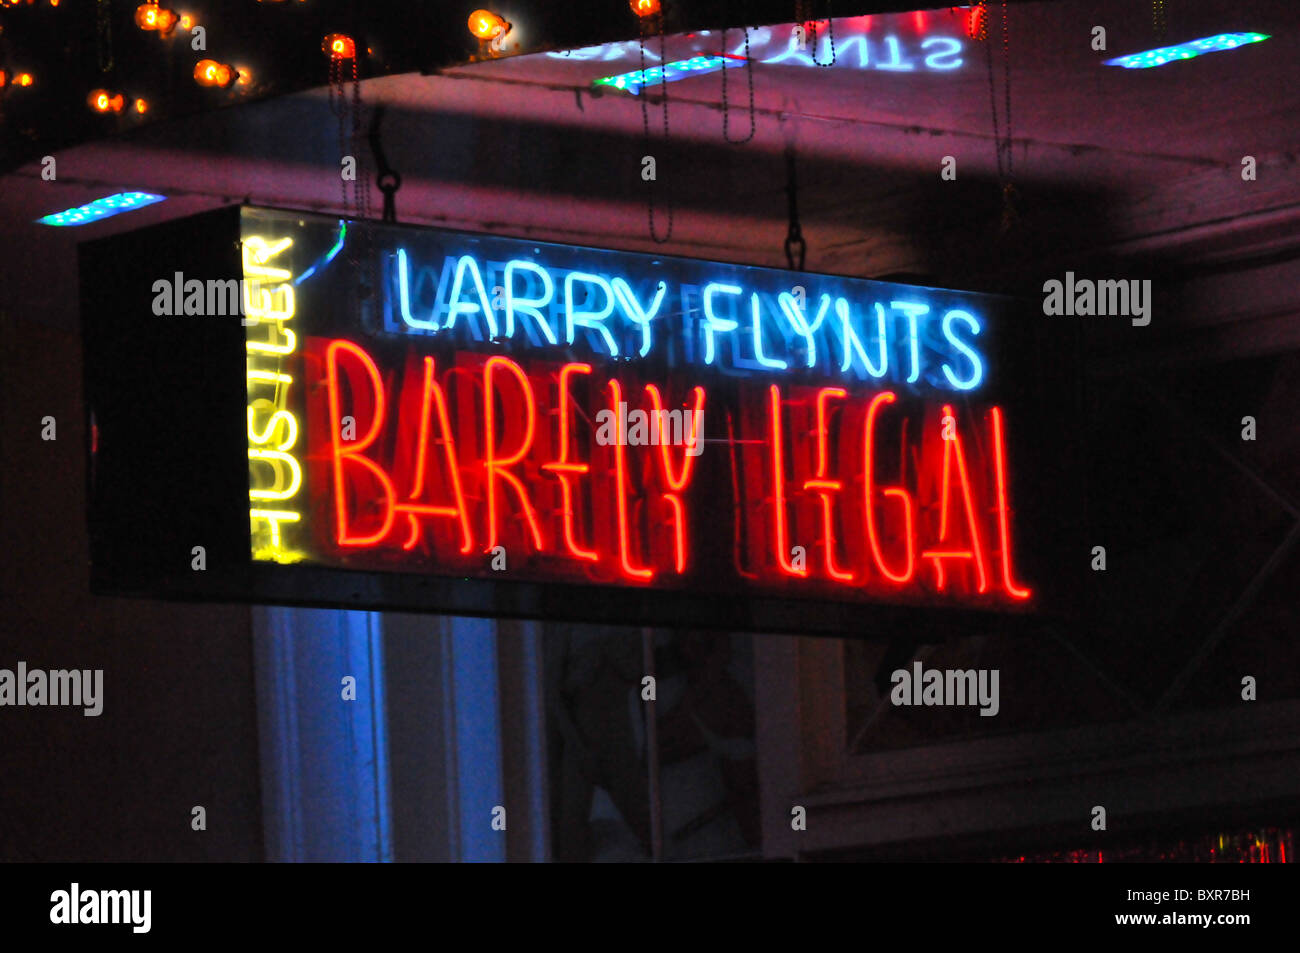 Hustler Larry Flynts Barely Legal' neon sign on Bourbon Street, French Quarter, New Orleans, Louisiana Stock Photo